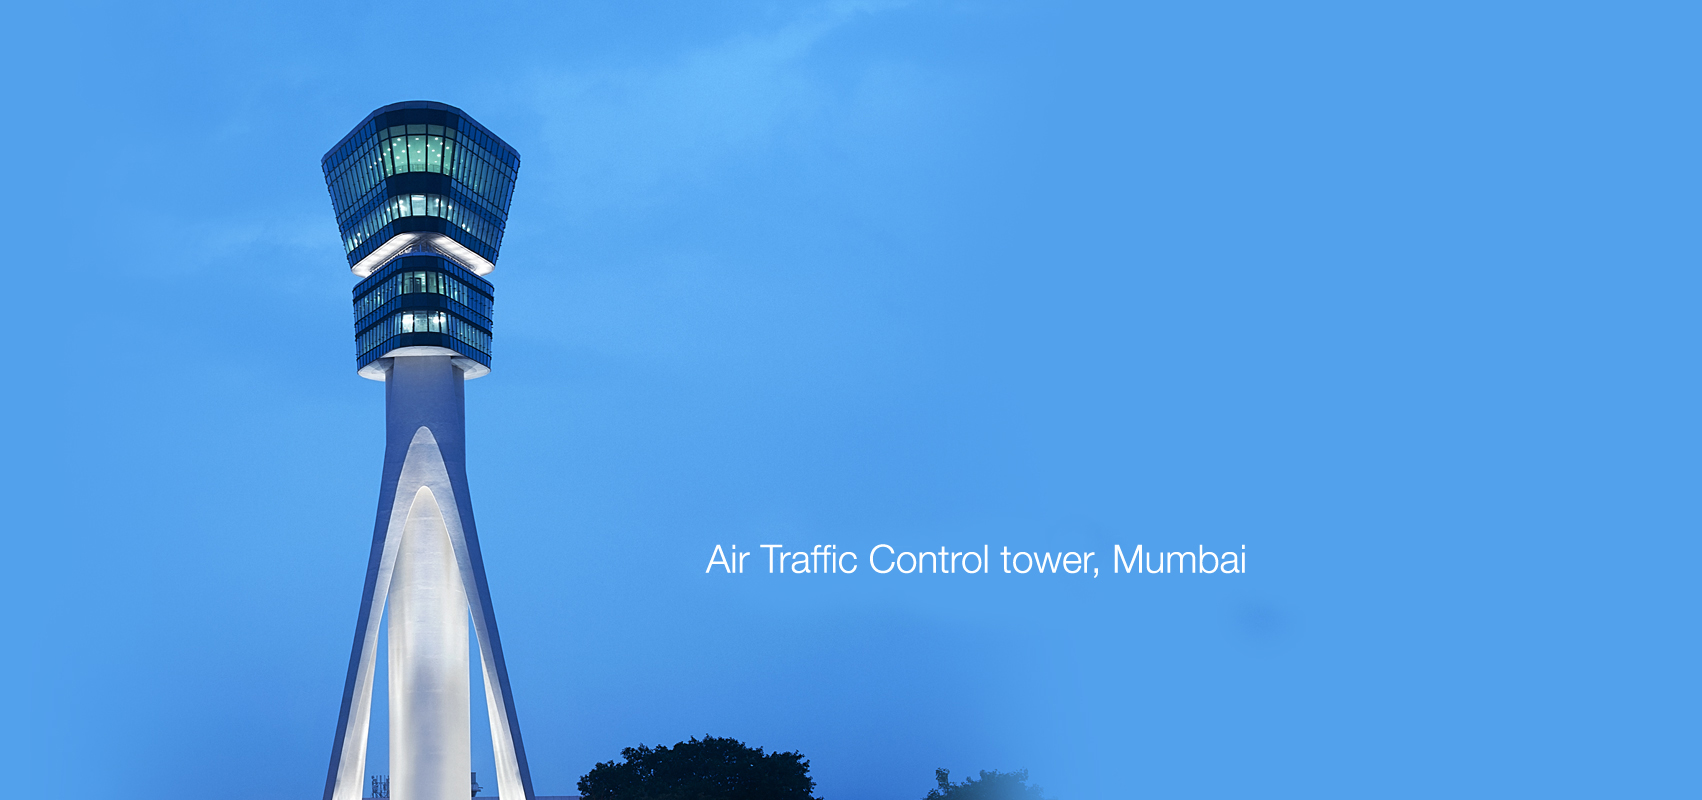 ATC Tower, Mumbai